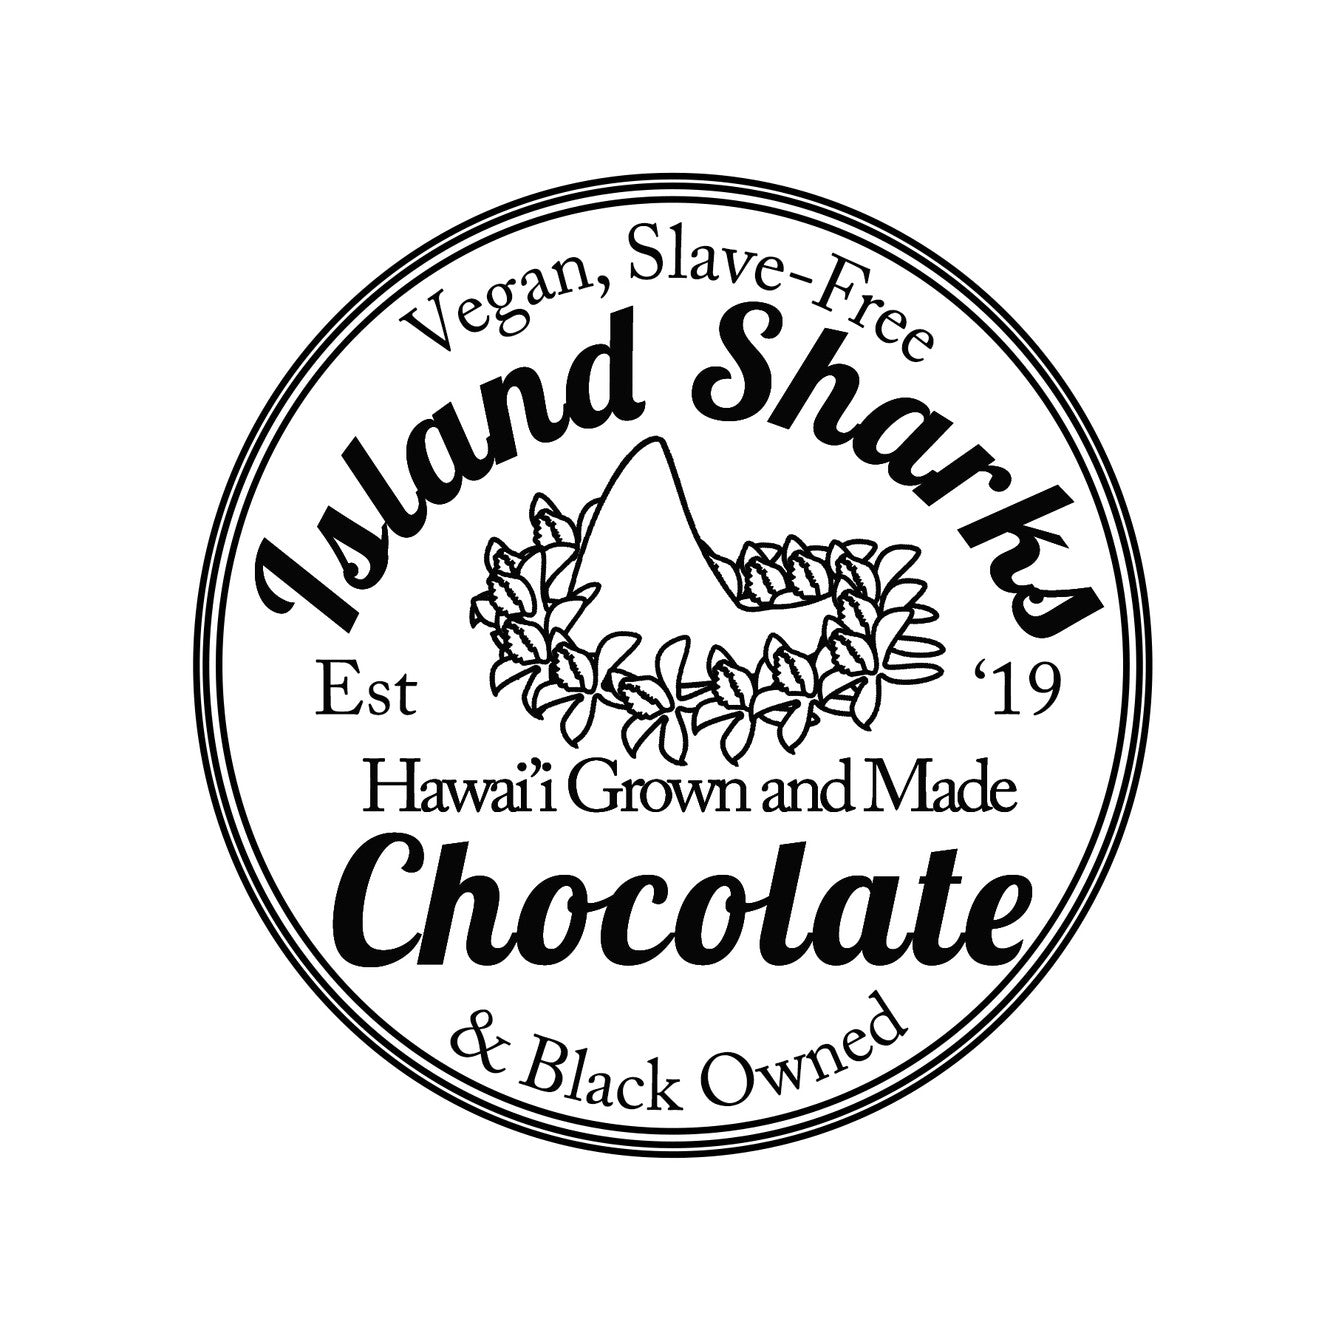 Island Sharks Chocolate